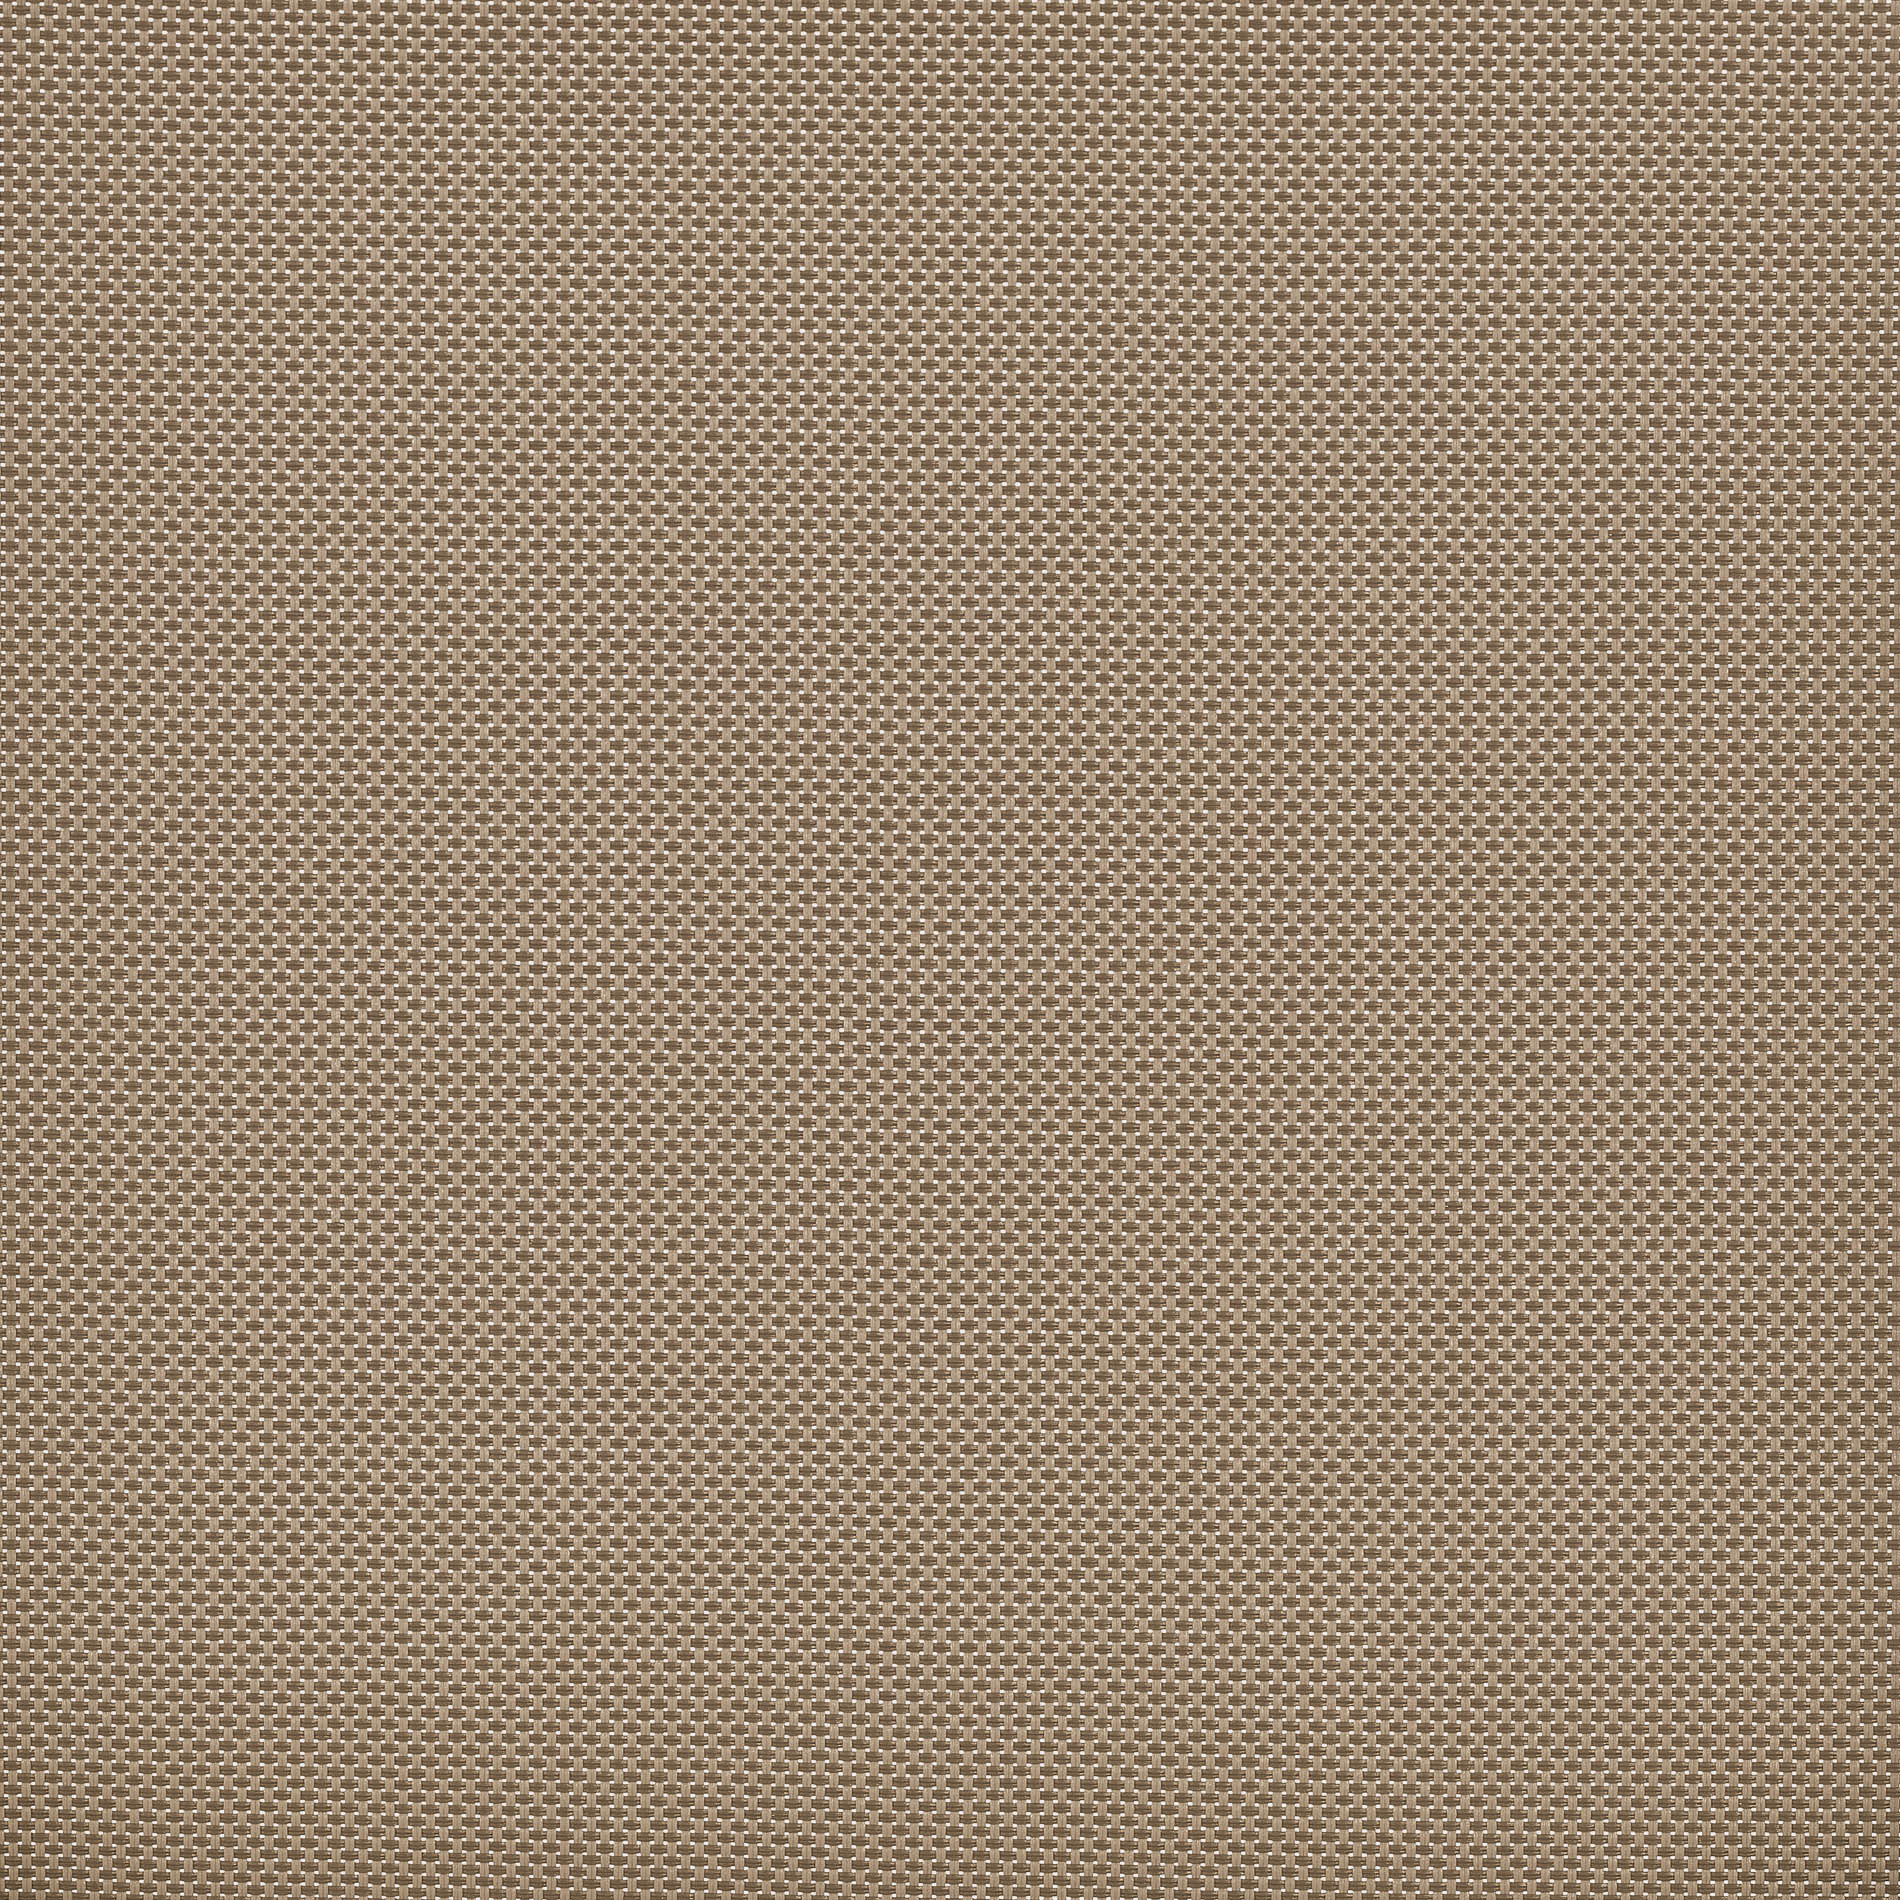 Altex - Fabric - NATTÉ 5% - Sable/Wood - 910988_TEMP_2